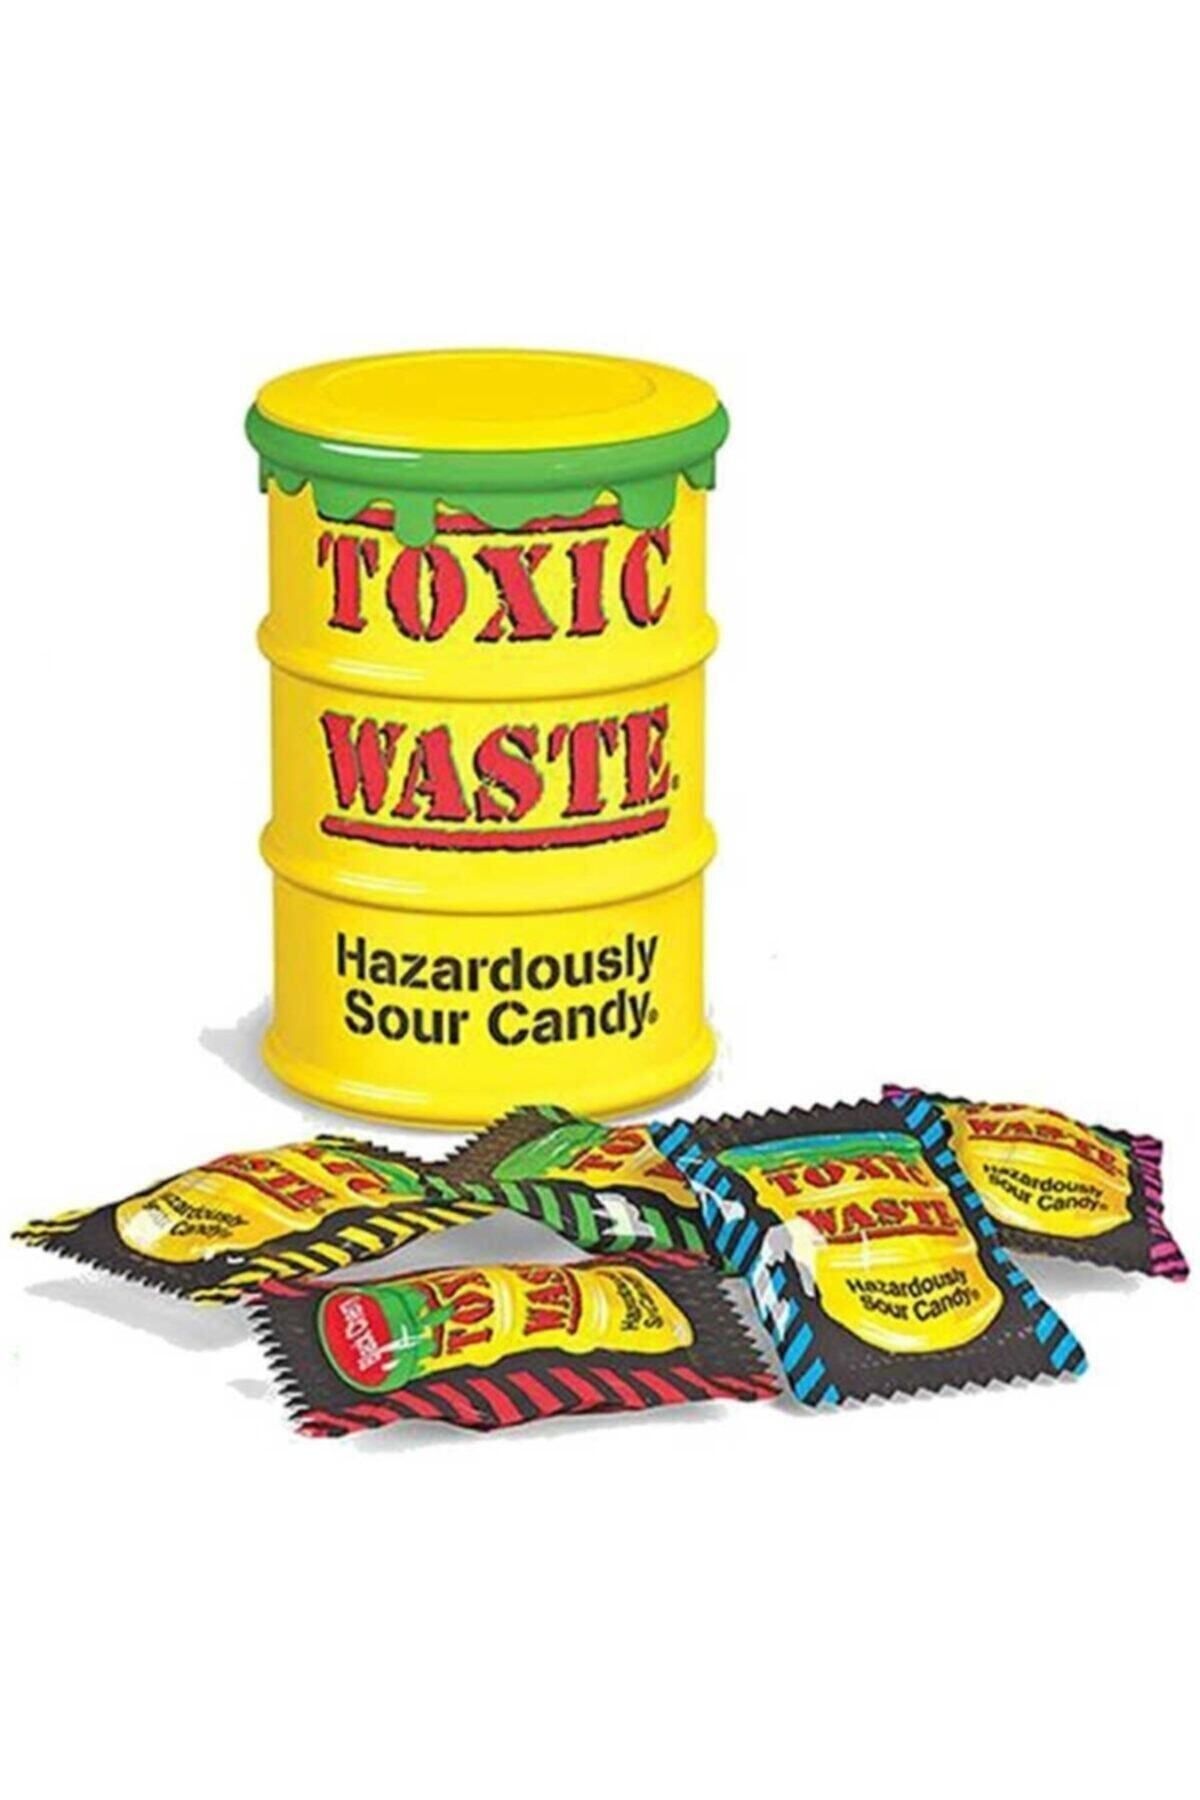 Токсик конфеты. Toxic waste конфеты. Кислые конфеты Токсик. Кислые конфеты Toxic waste. Токсик Вейст самые кислые конфеты.